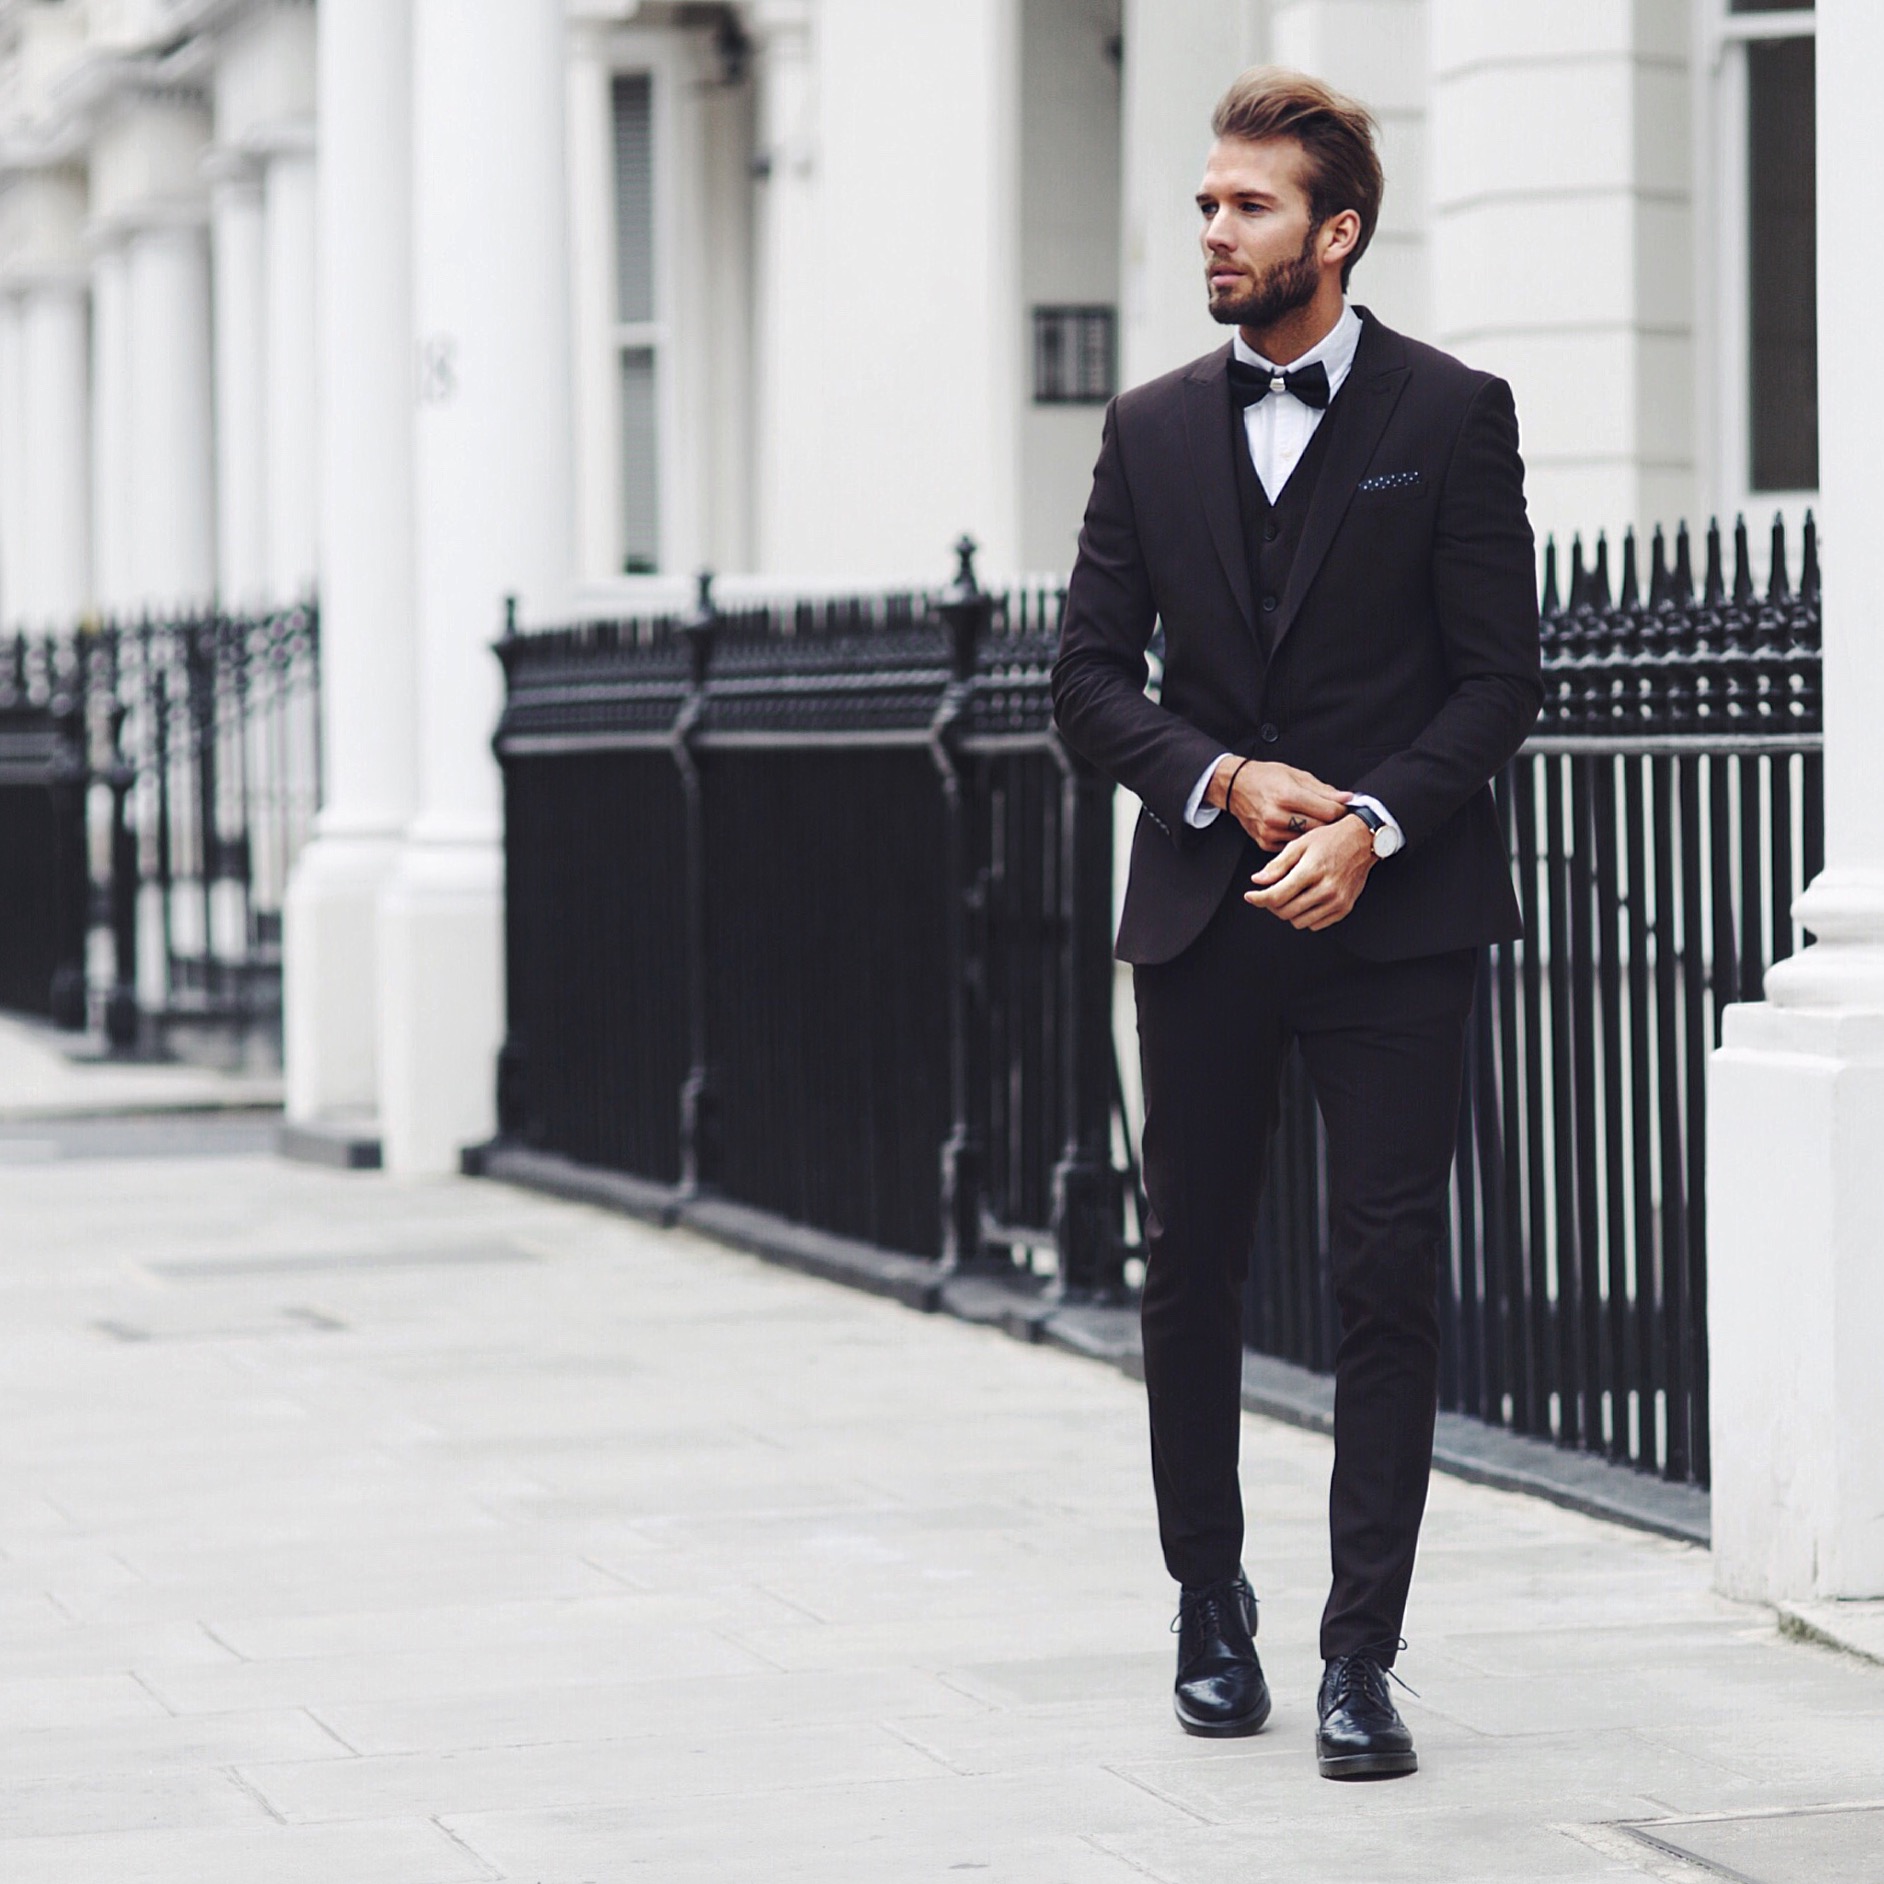 Suit in London